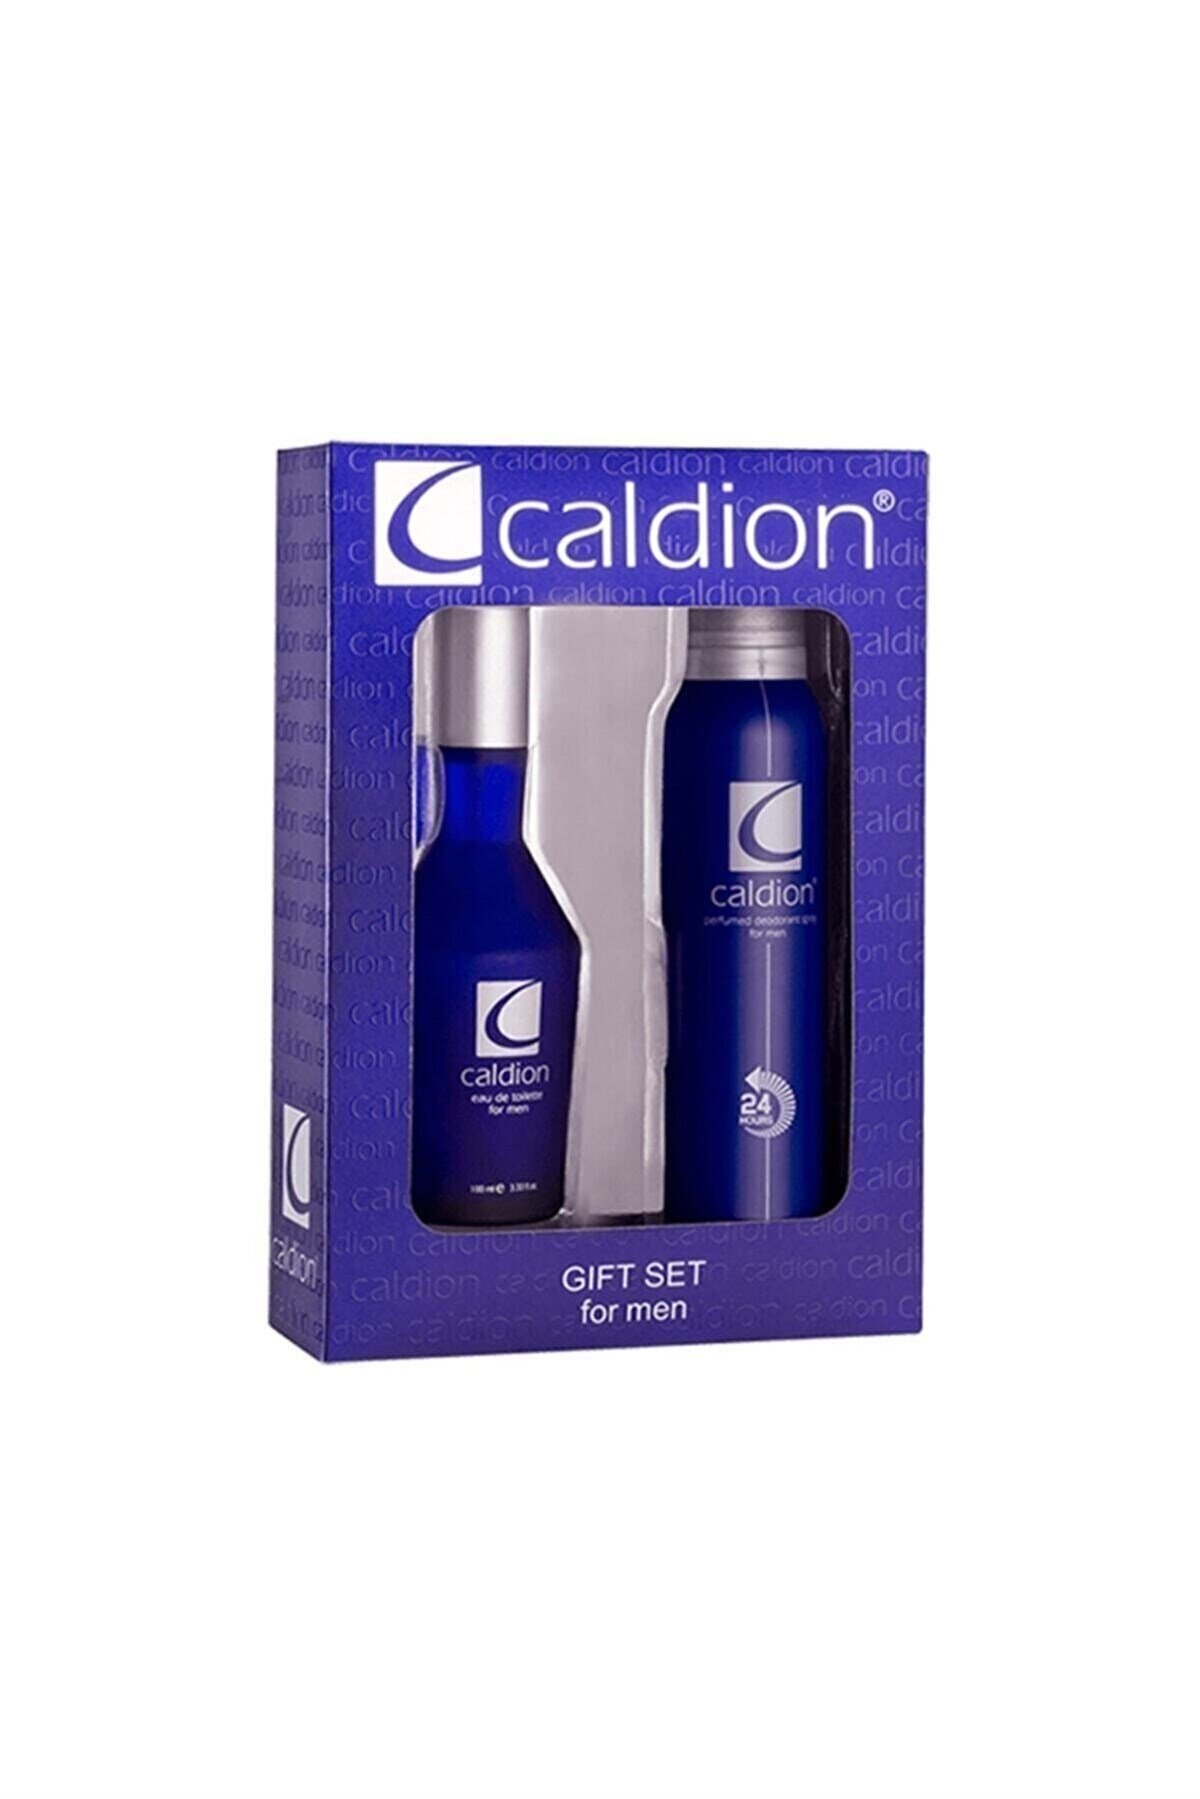 CALDION Classic Erkek Edt 100 ml ve 150 ml Deodorant Erkek Parfüm Seti |  Farma Ucuz